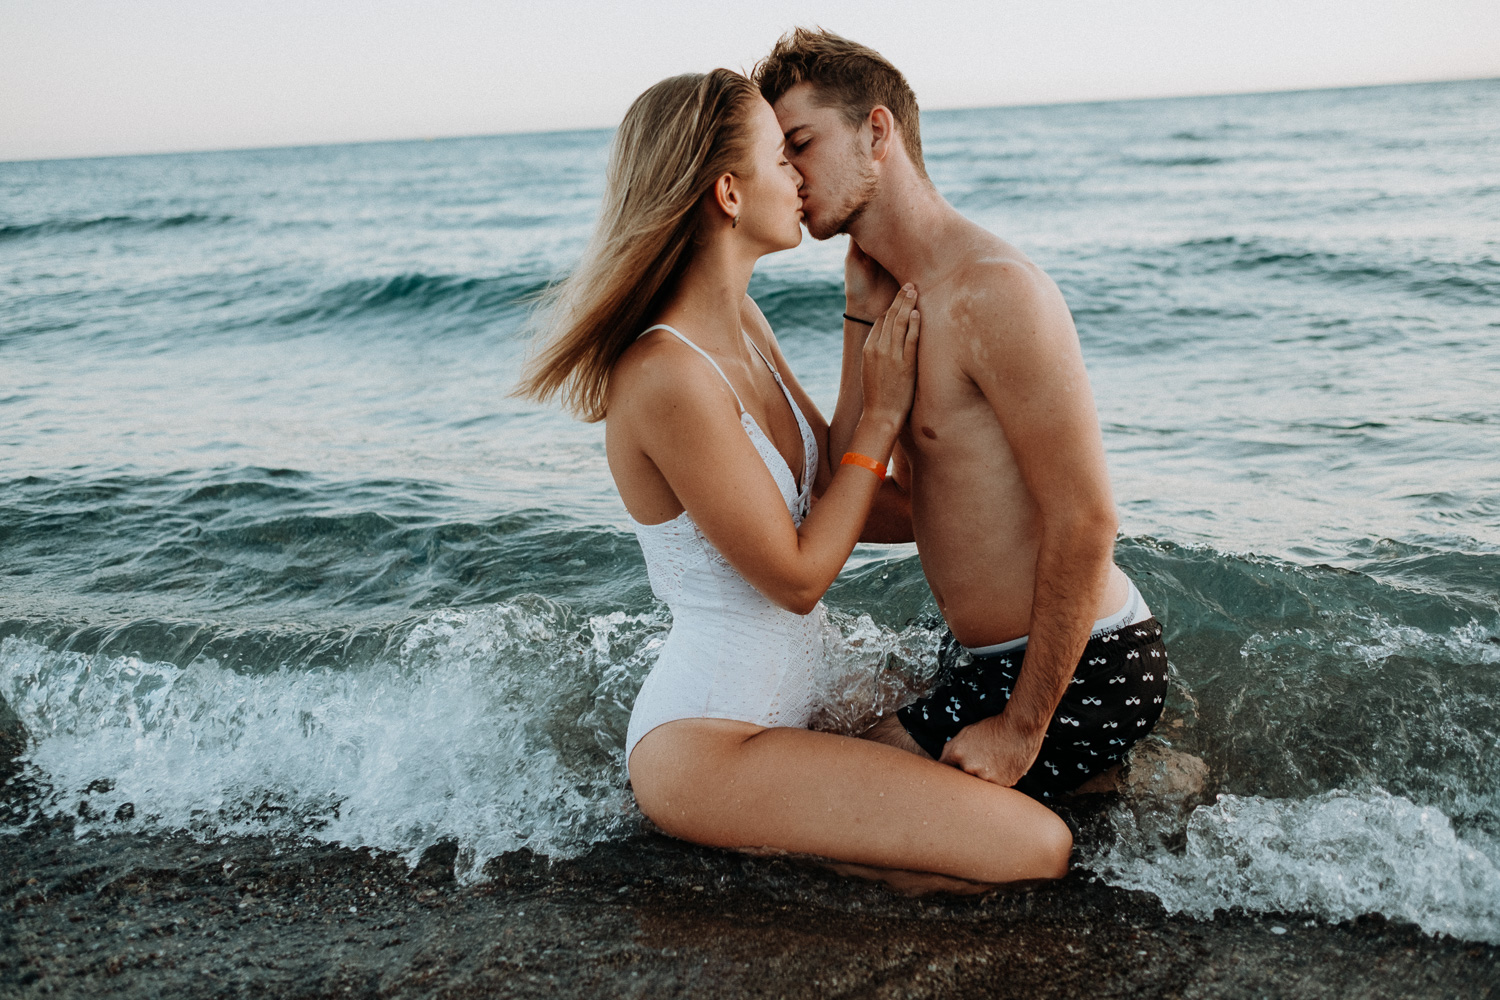 Couple Shooting Griechenland Beachcouple Nina Danninger Photography